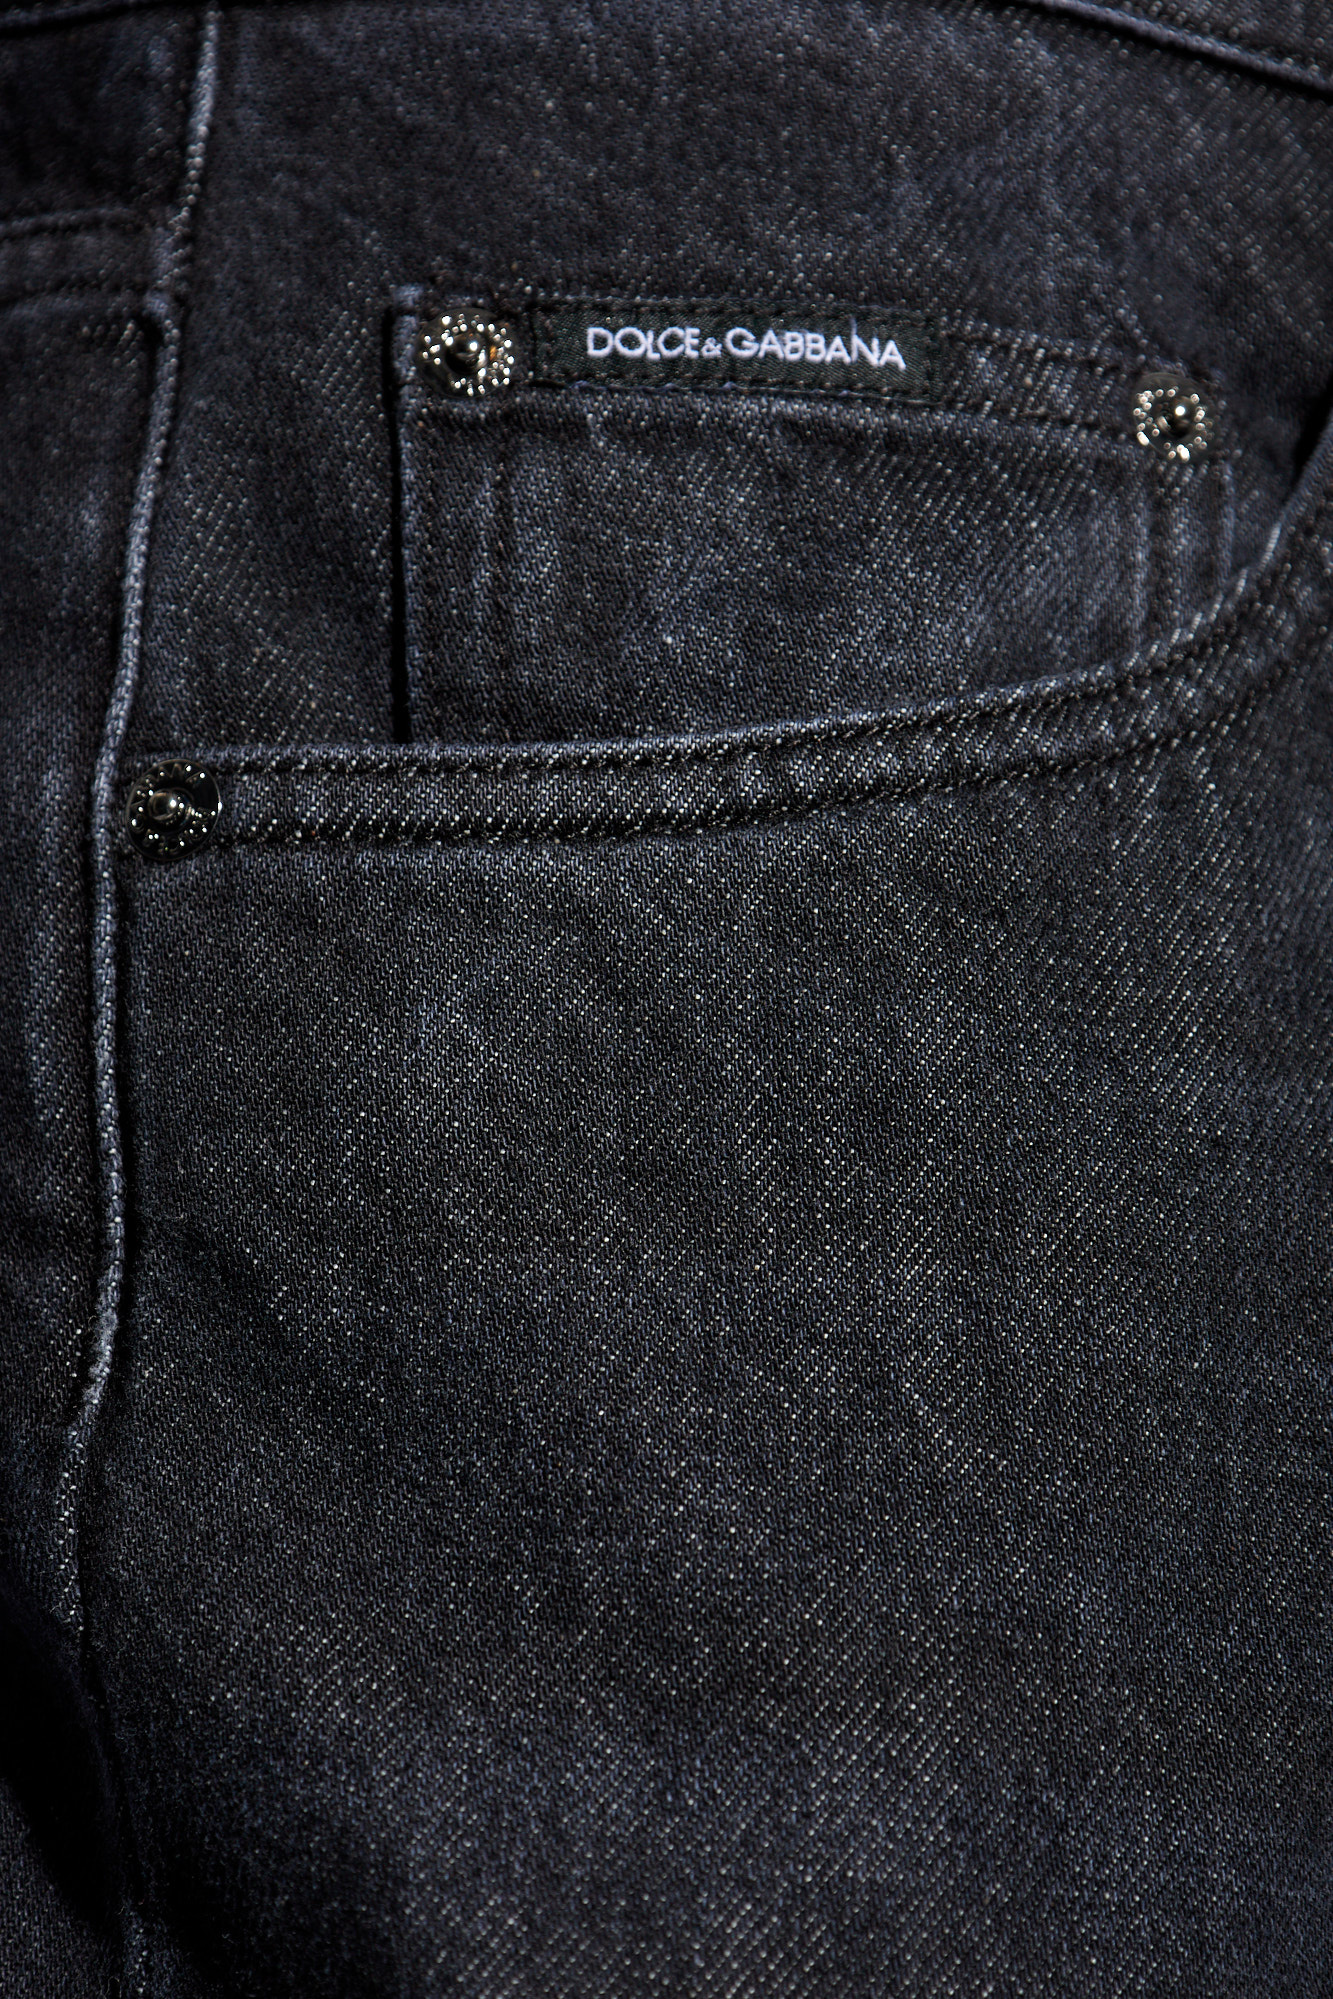 Dolce & Gabbana Jeans with logo